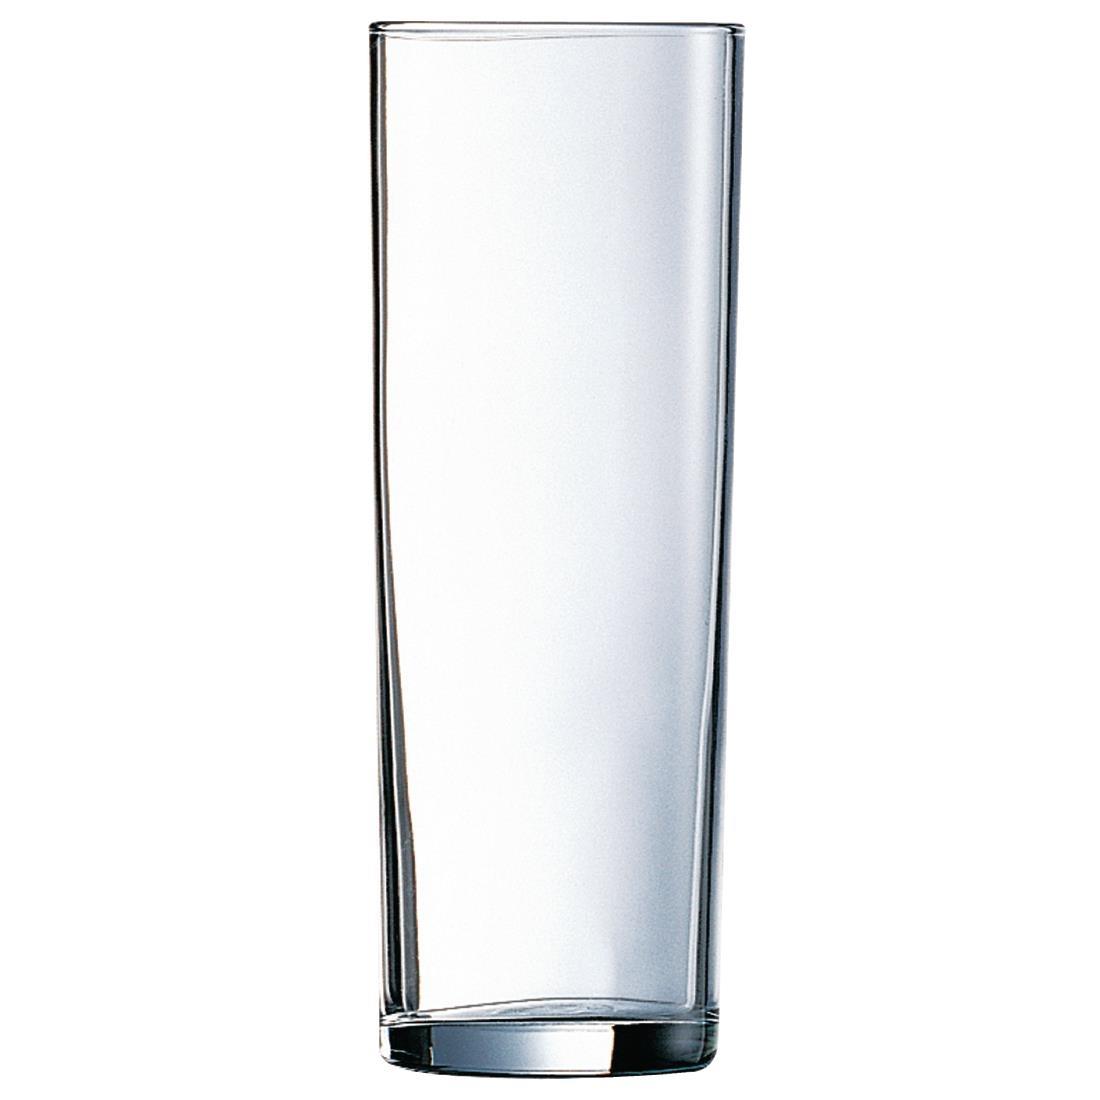 Arcoroc Islande Hi Ball Glasses 310ml (Pack of 24) - DL177  - 1